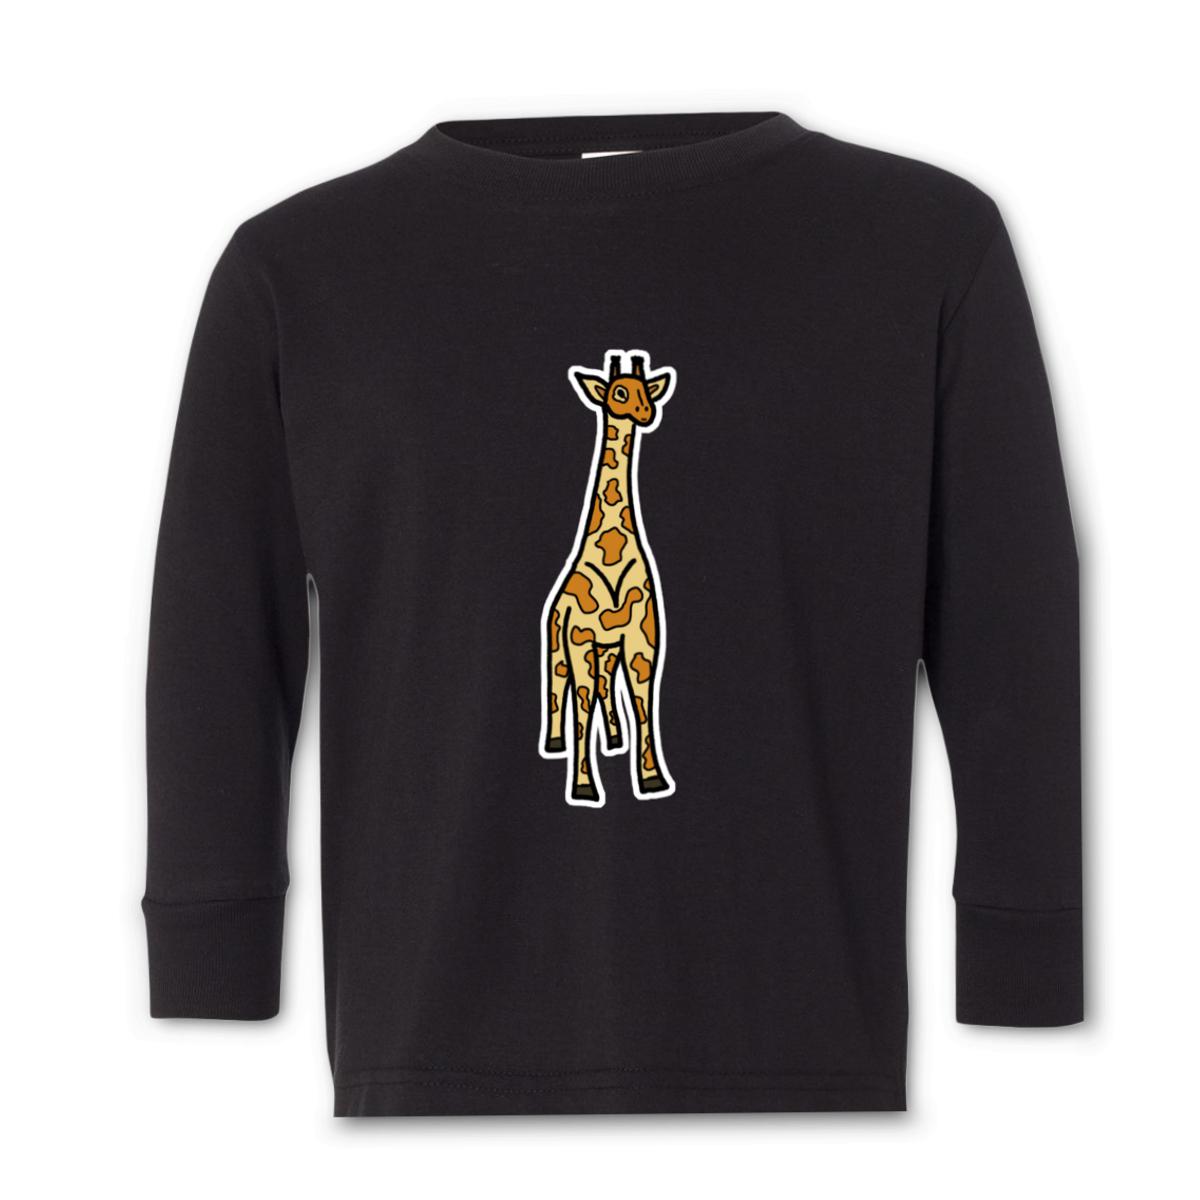 Toy Giraffe Toddler Long Sleeve Tee 4T black